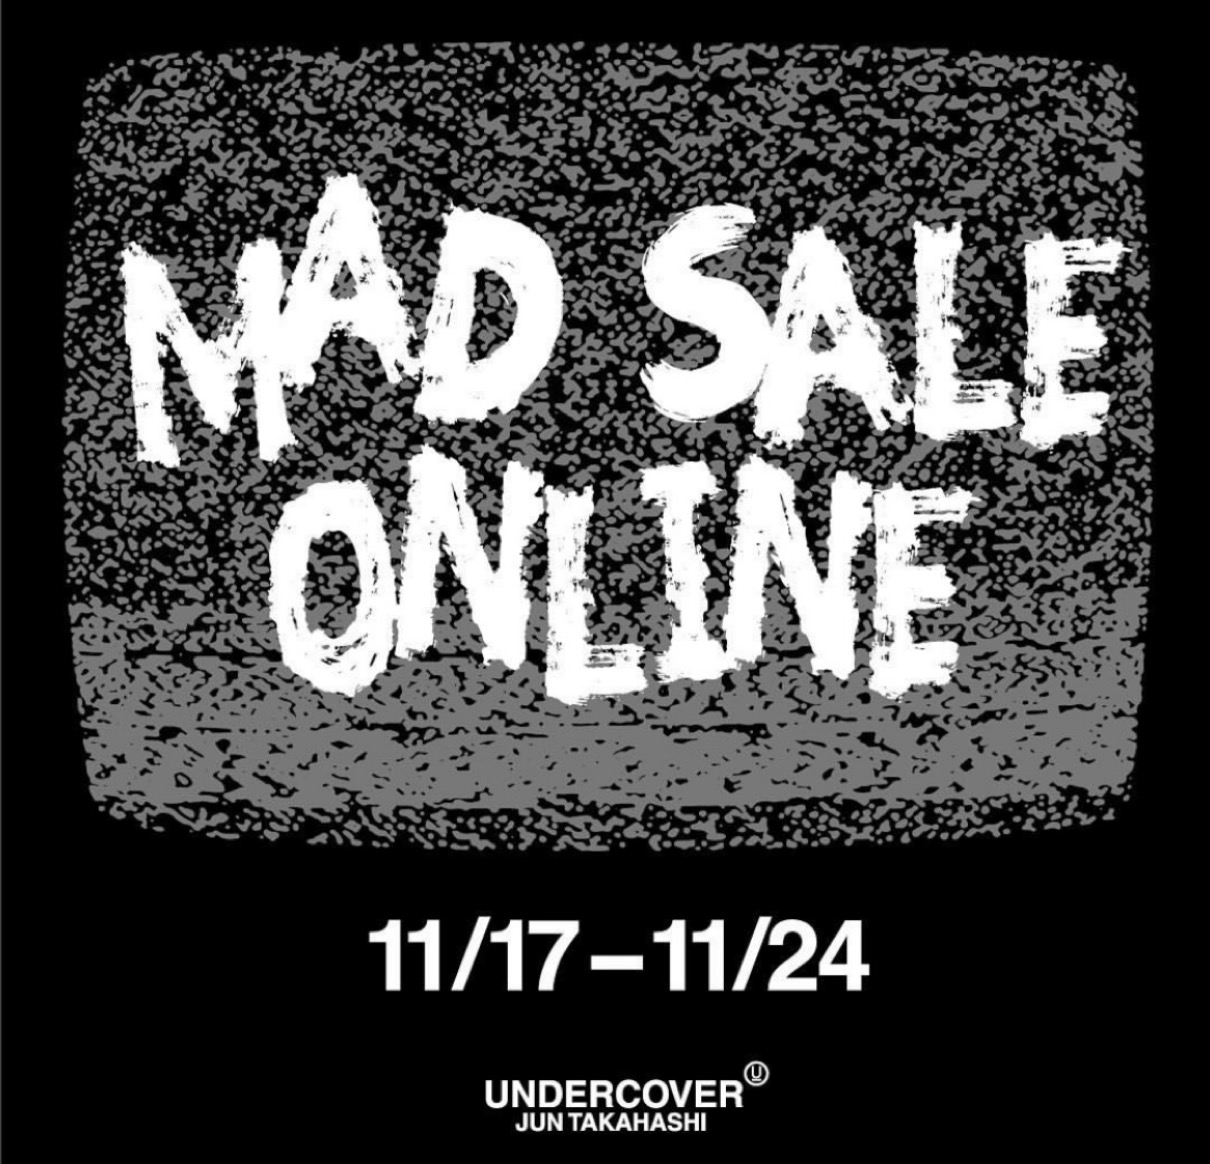 UNDERCOVER】史上最大規模の大型セール「MAD SALE ONLINE」が11月24日 